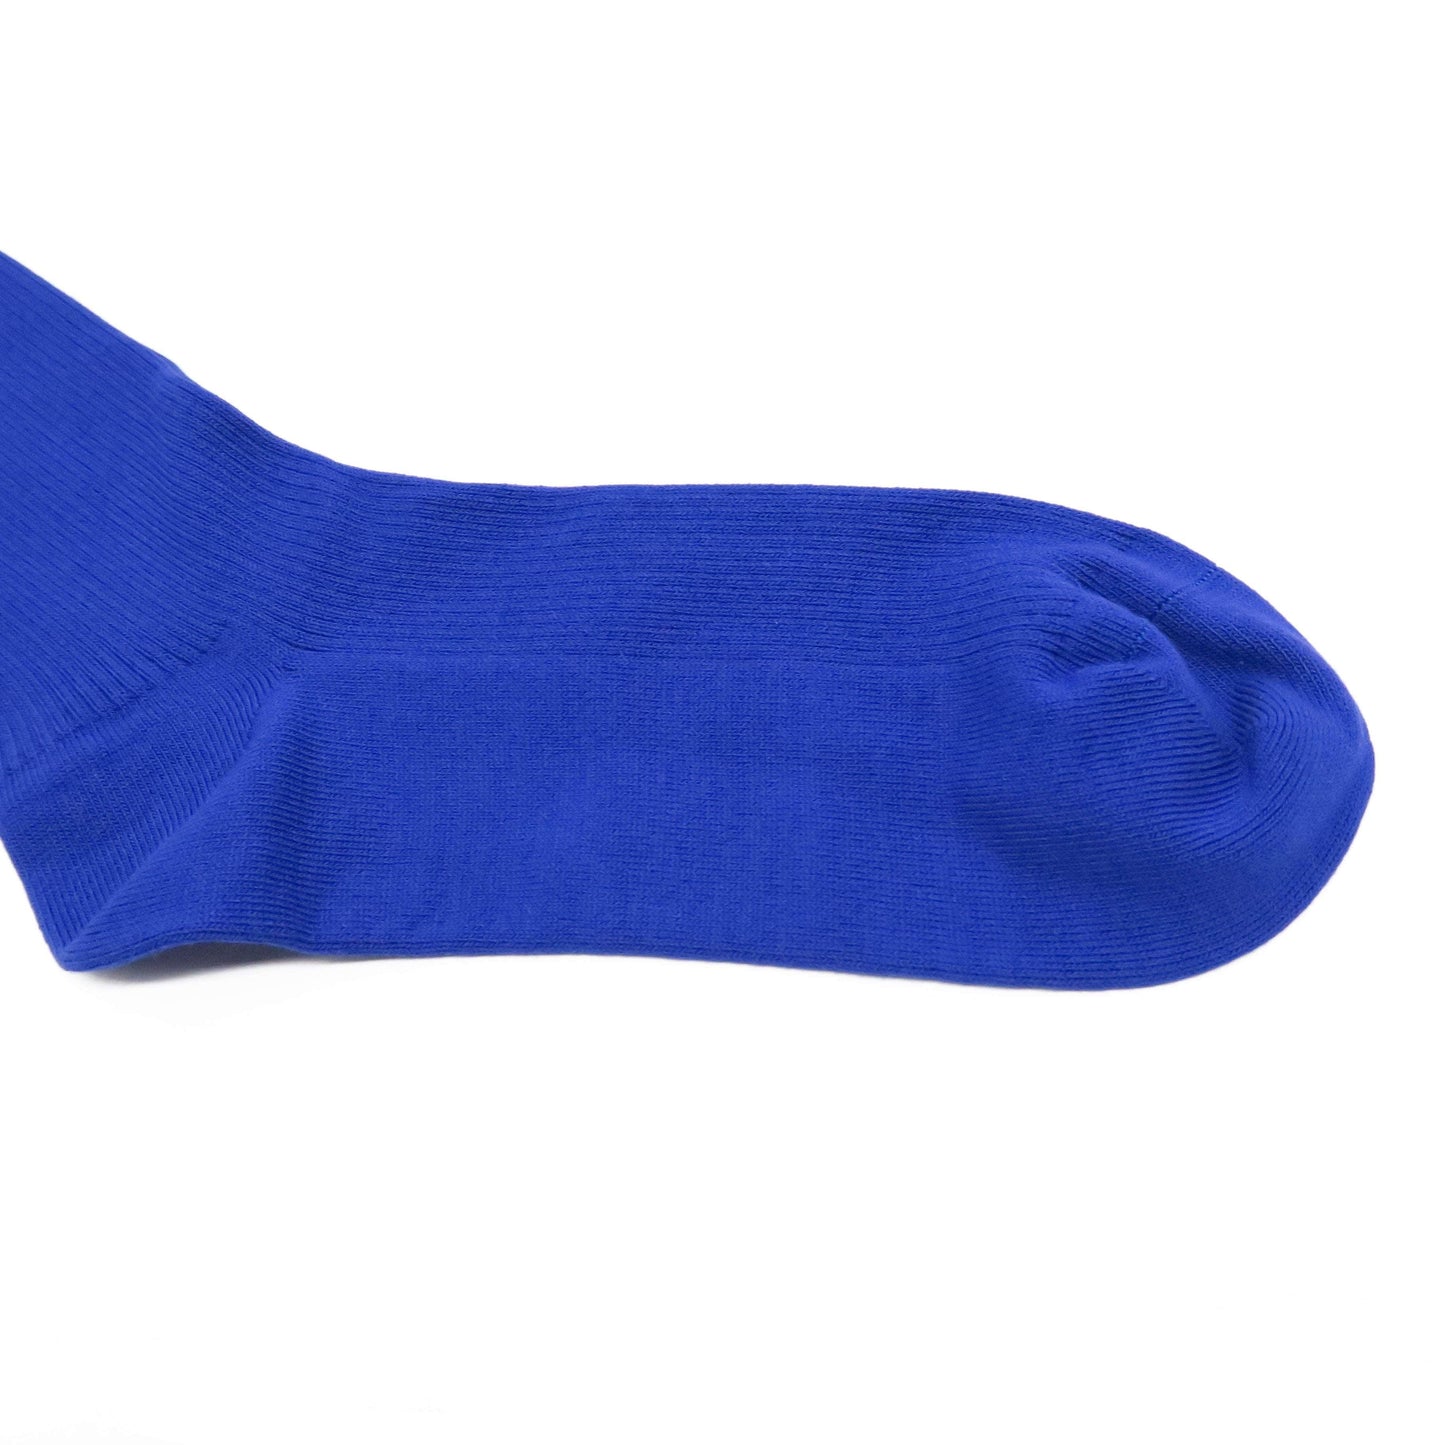 faye socks - bright blue crew socks